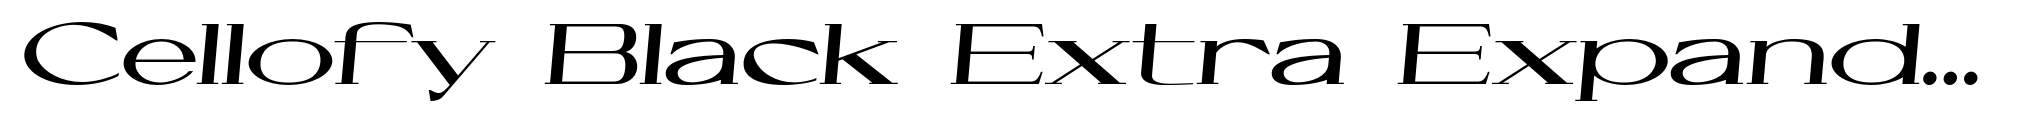 Cellofy Black Extra Expanded Italic image